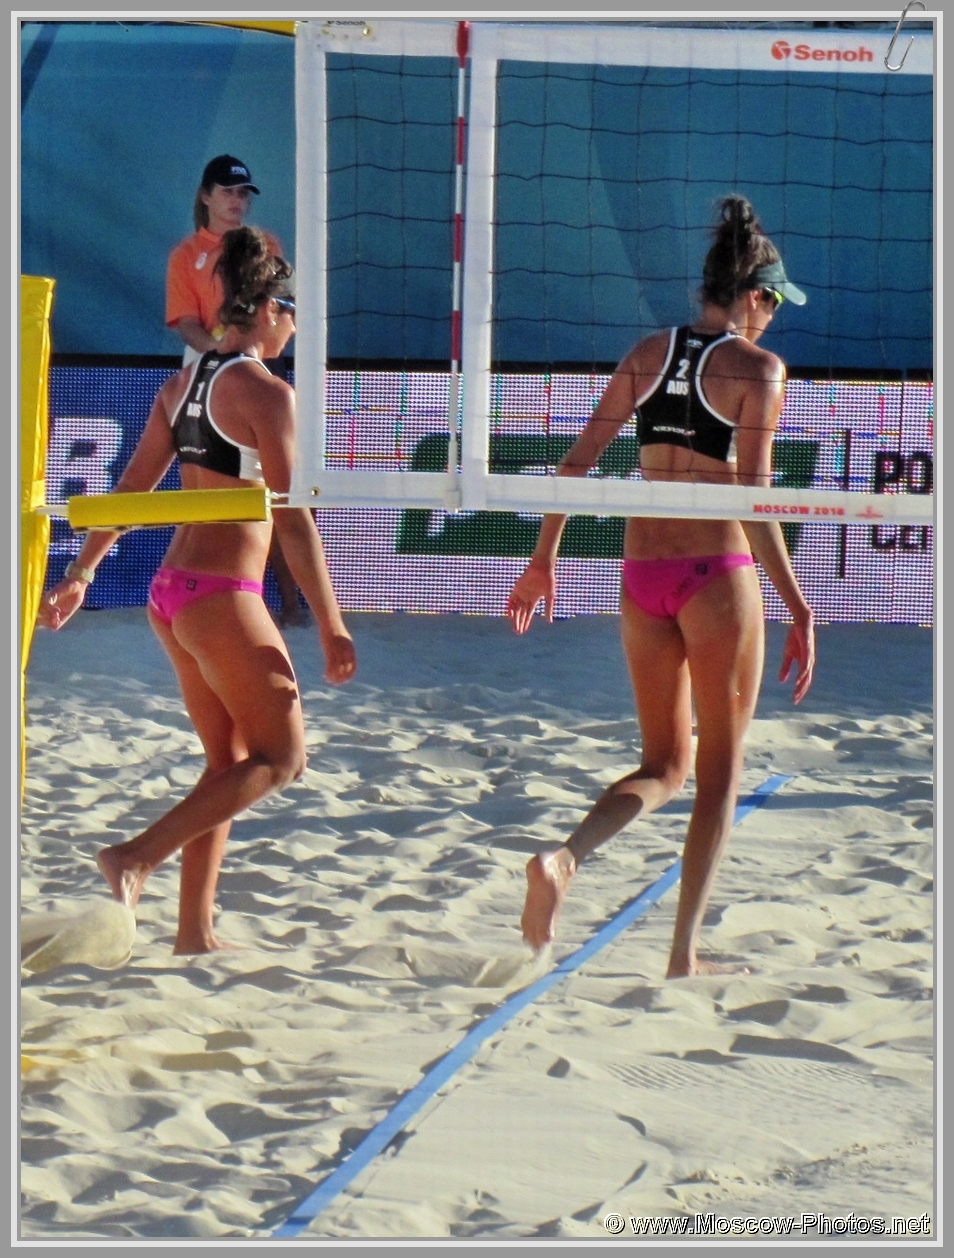 Taliqua Clancy and Mariafe Artacho del Solar at FIVB Beach Volleyball World Tour